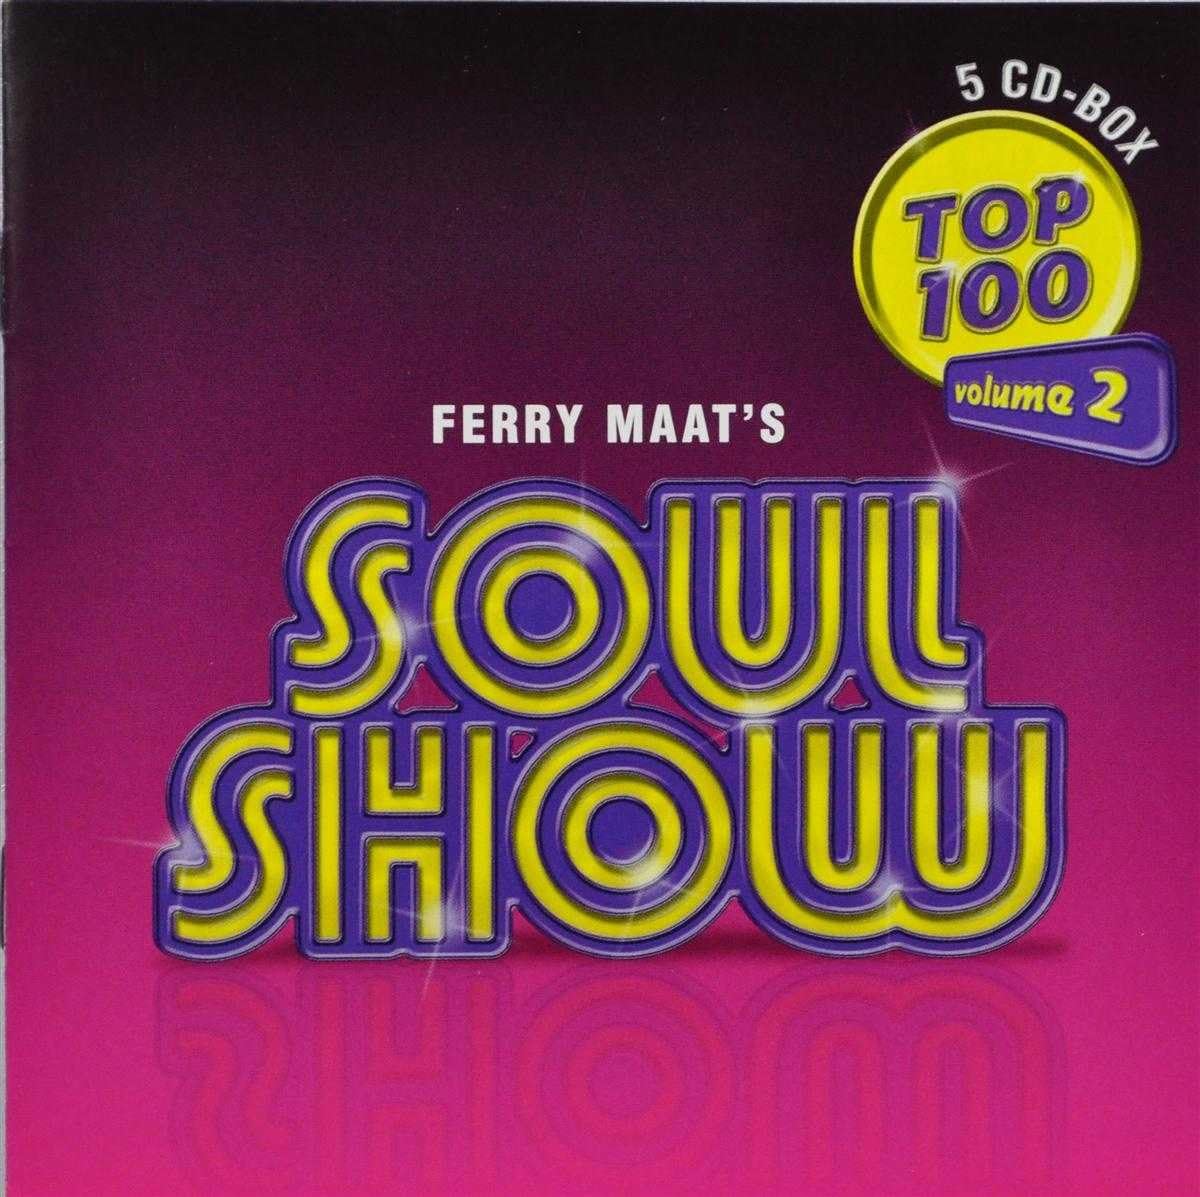 Ferry Maat's Soul Show Top 100 Volume 2 (5CD)